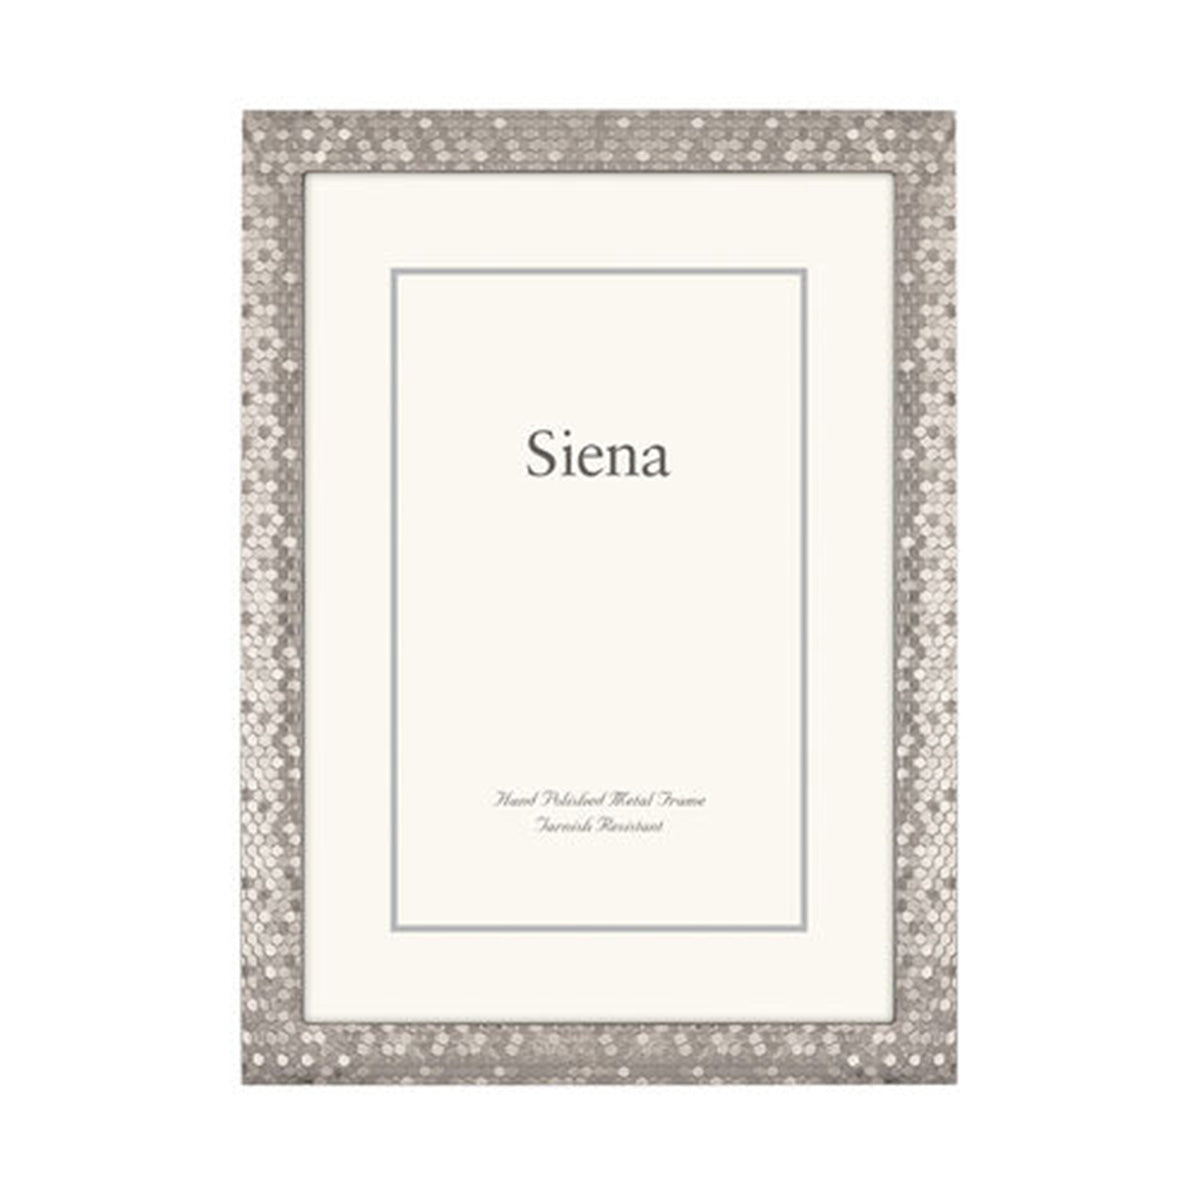 Siena Glitter Silverplate Frame